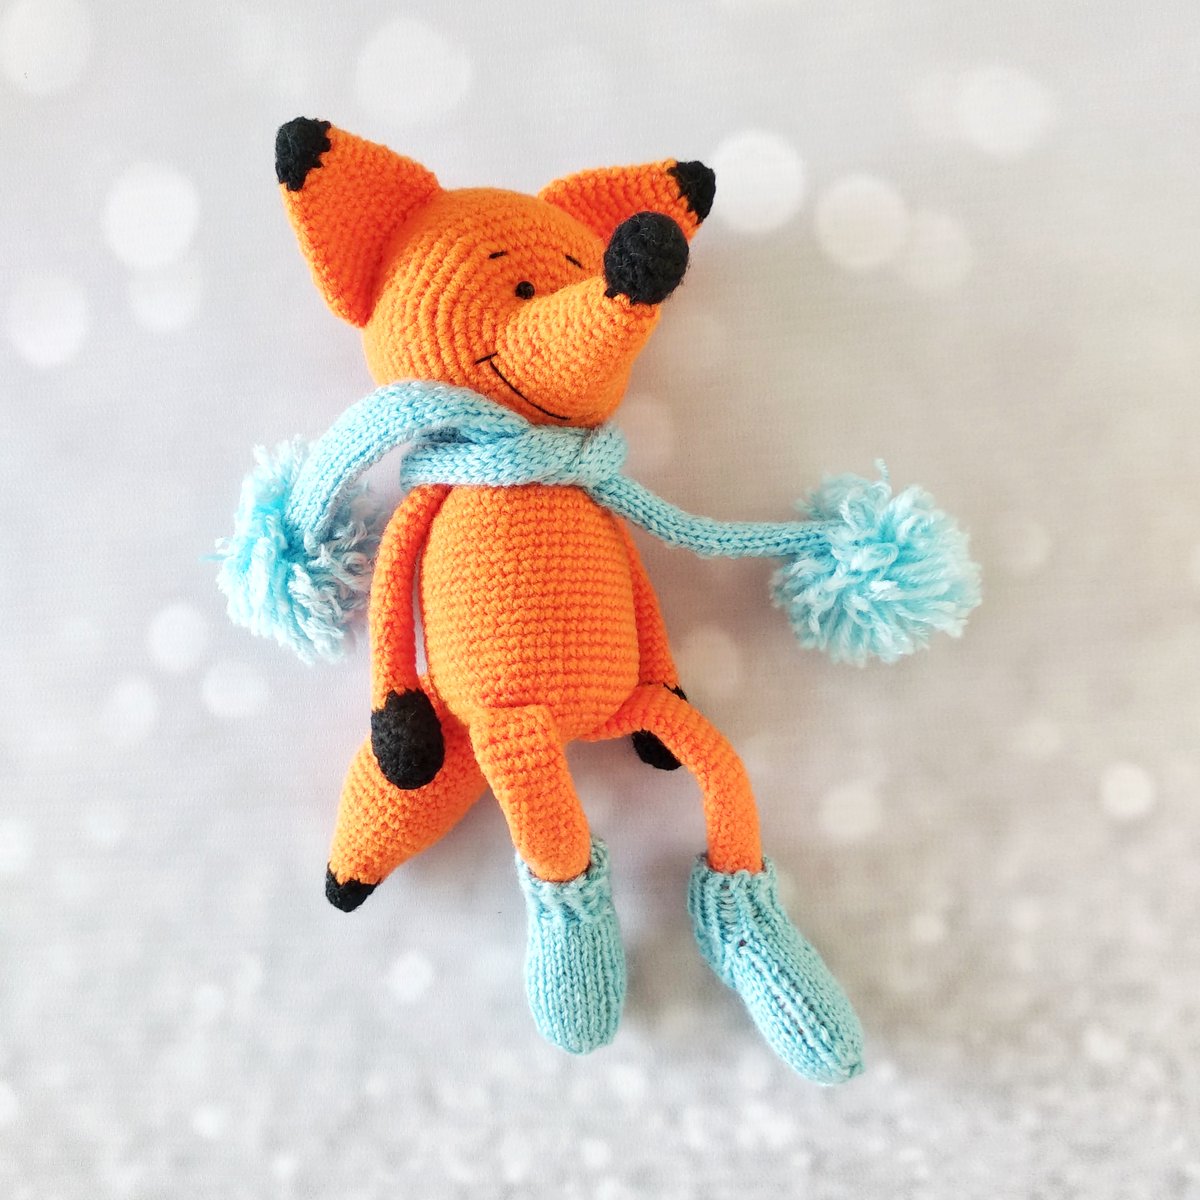 New day, new toy

#babyamitoys #friendy #mimimi #amigurumi #crochetlobby #etsycrafts #amigurumibebek #etsysell #yarnaddict #stuffedtoys #haekle #crochetdesign #dollmaking #lovecrochet #babytoys #crochethook #amigurumilovers #amigurumidesigner #crochet #crochetinspiration #gift